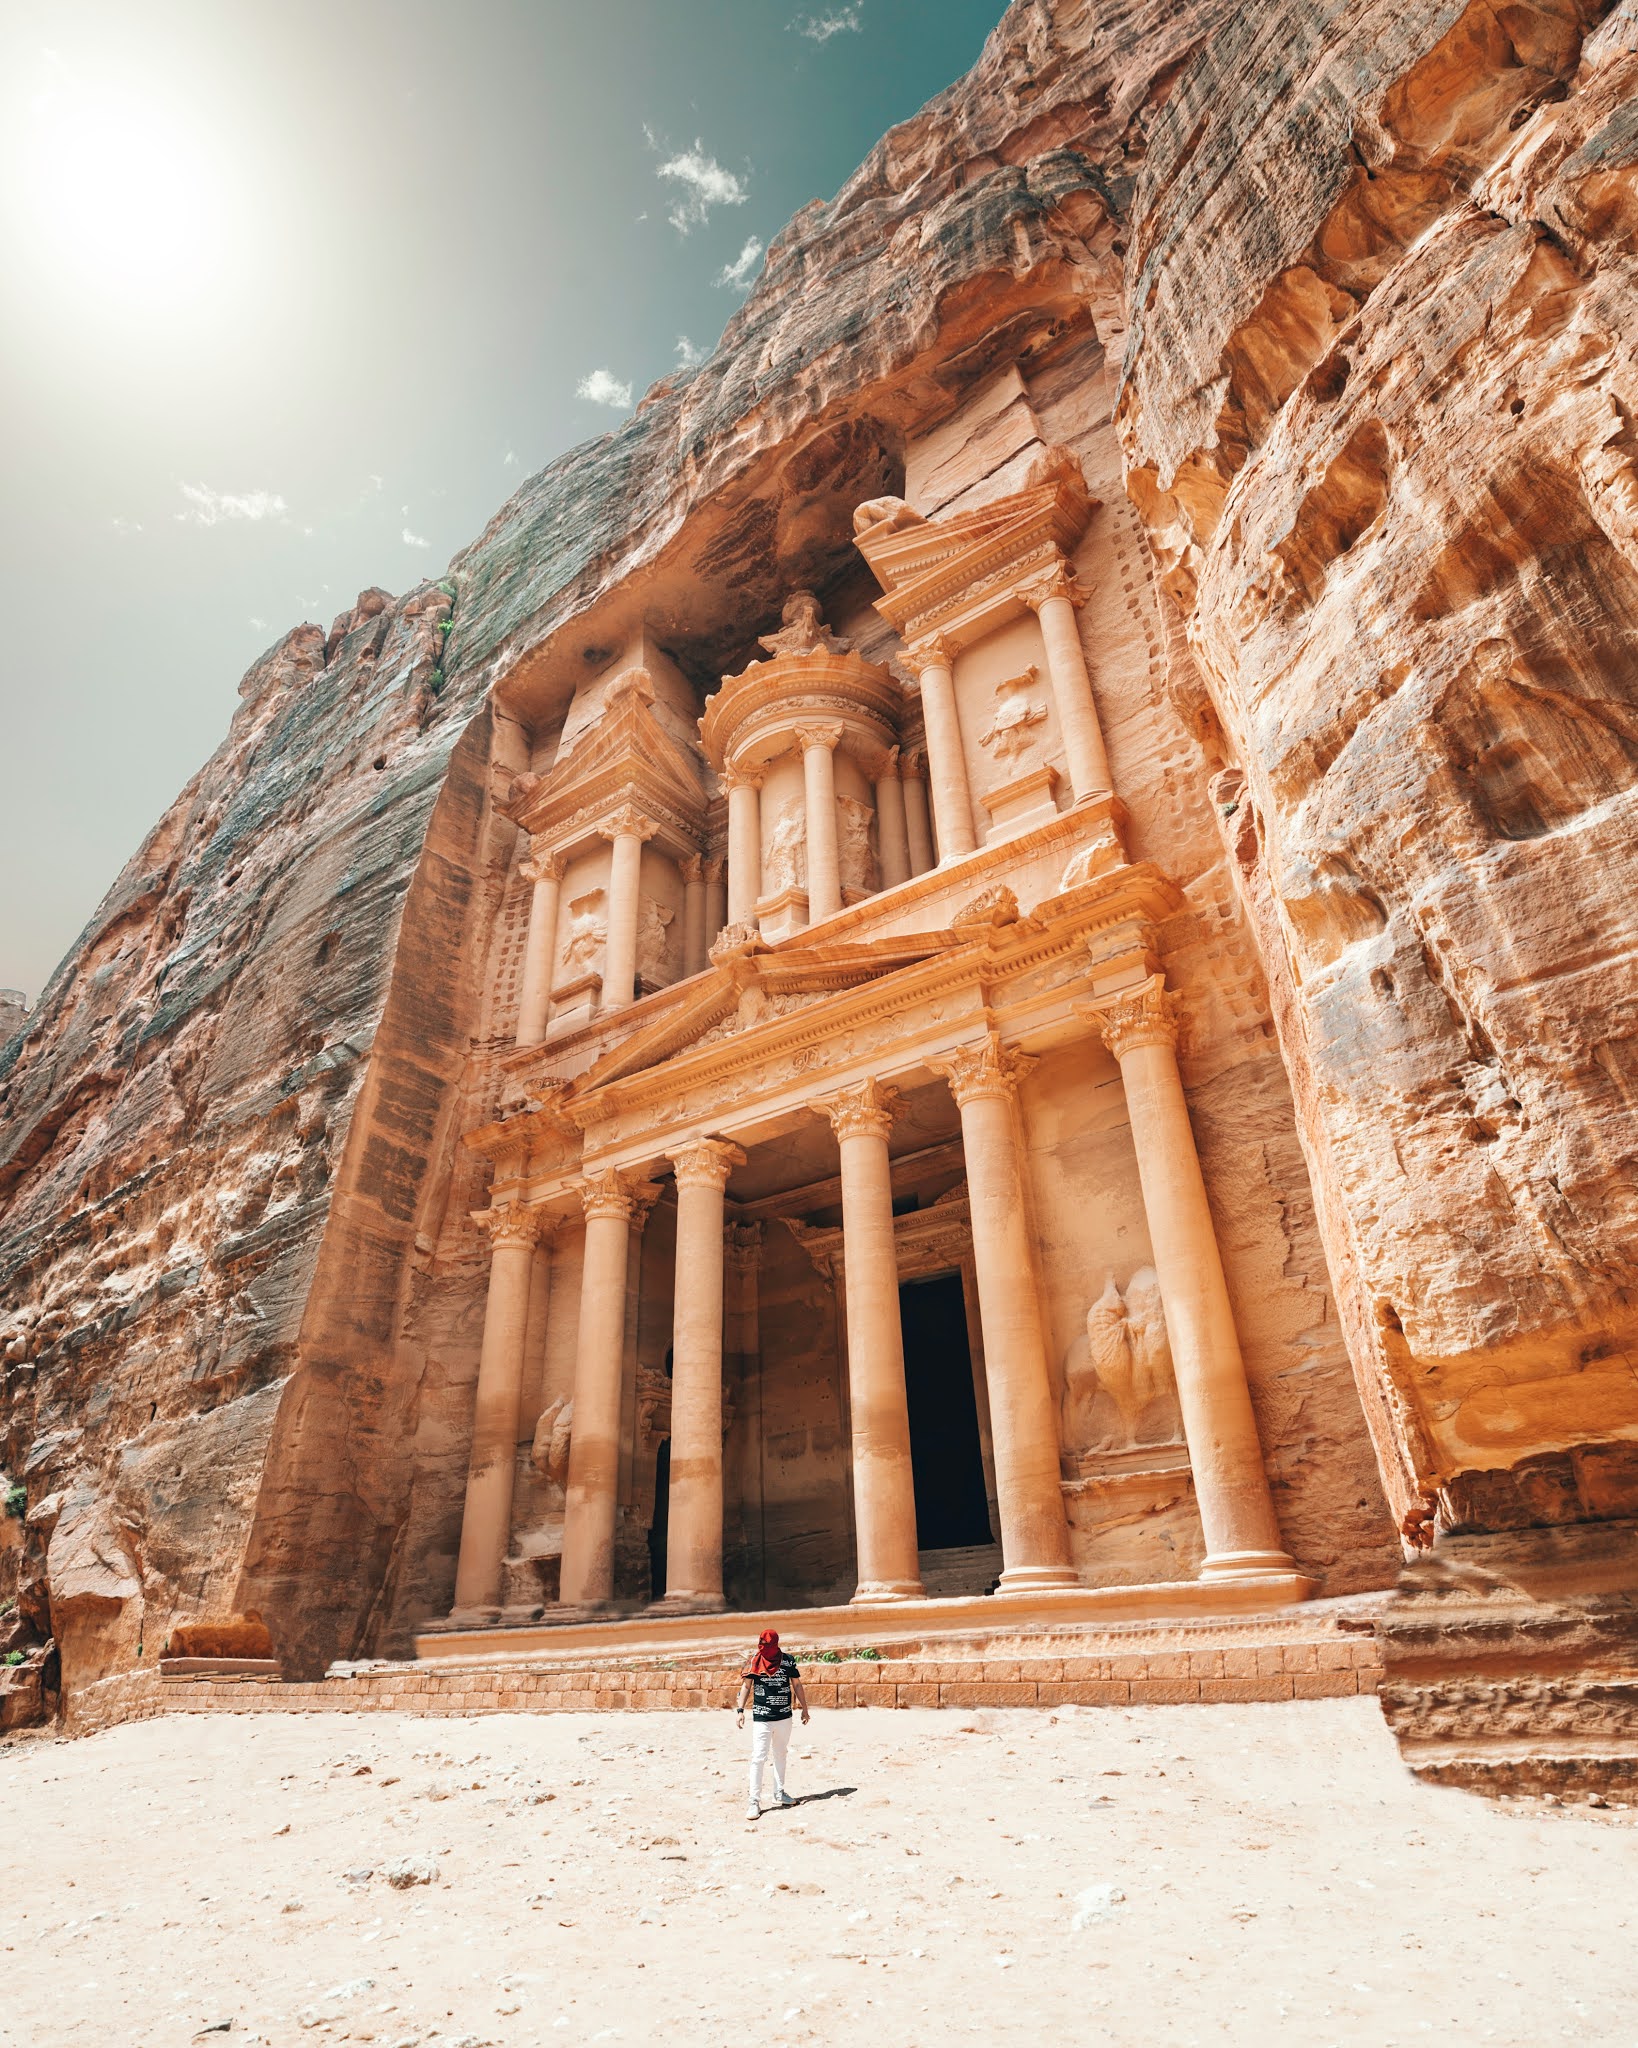 Petra: The Rose City